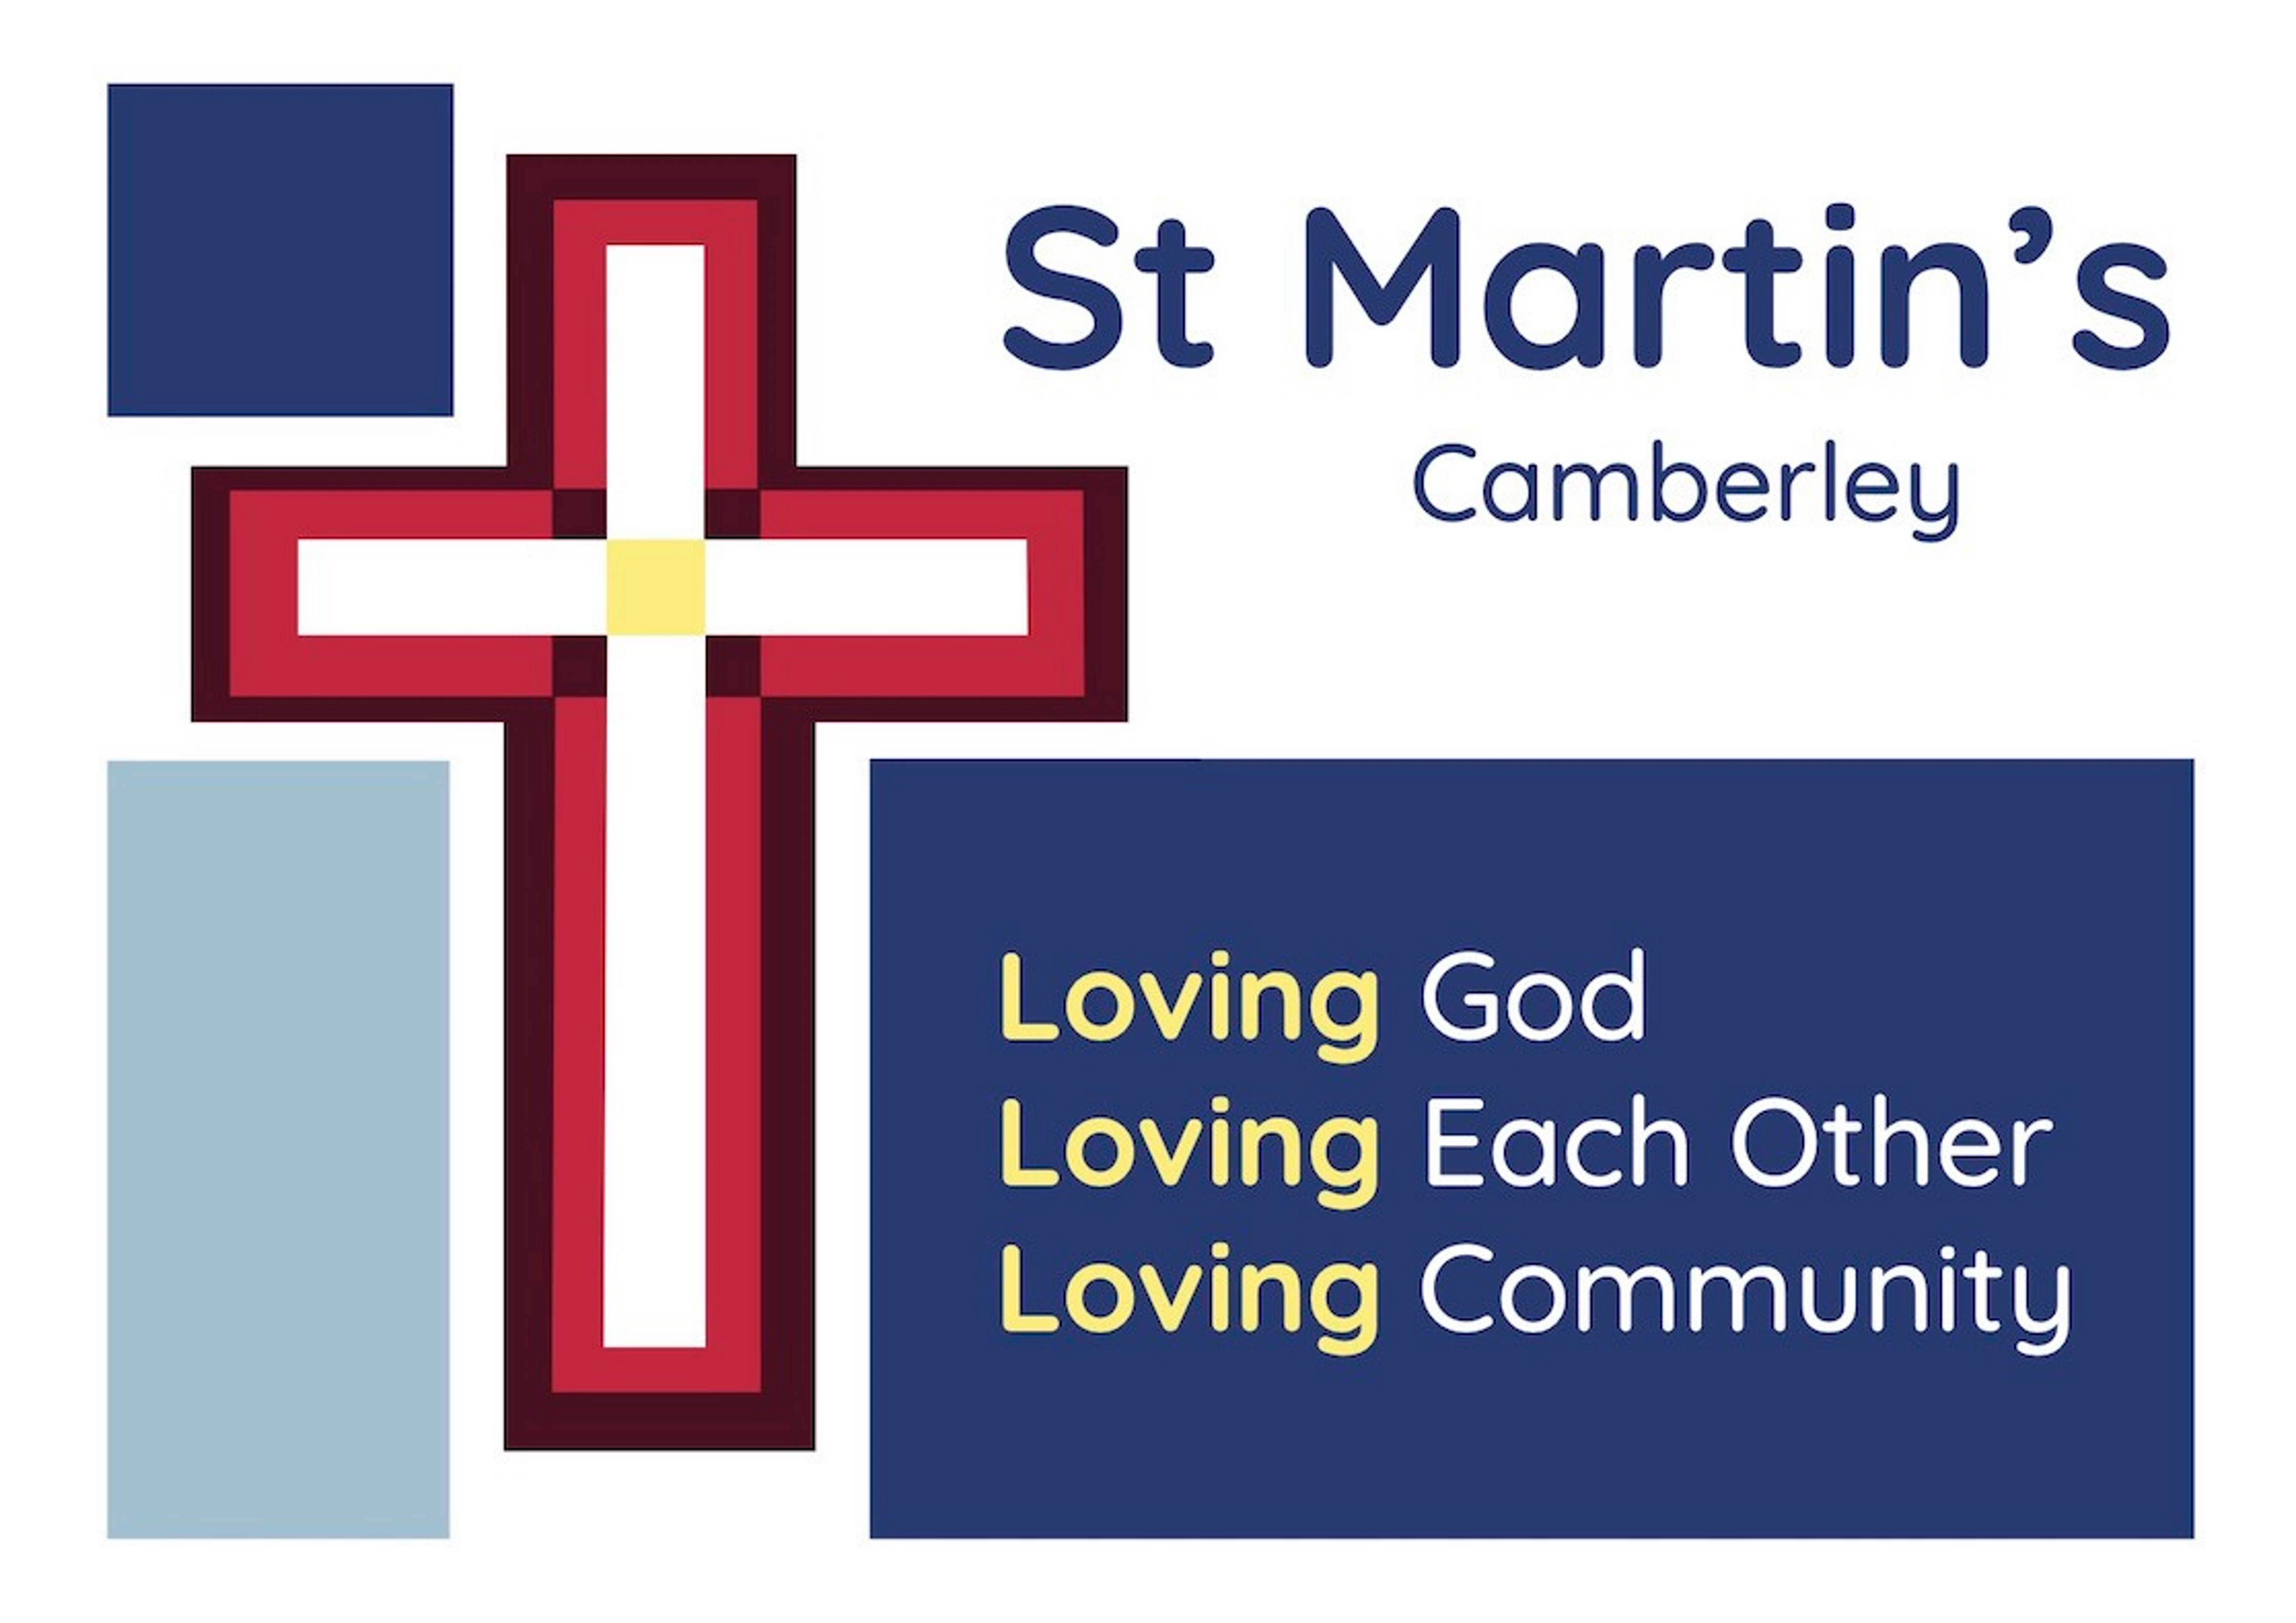 Logo of a cross saying St Martin's Camberley, Loving God, Loving Each Other, Loving Community